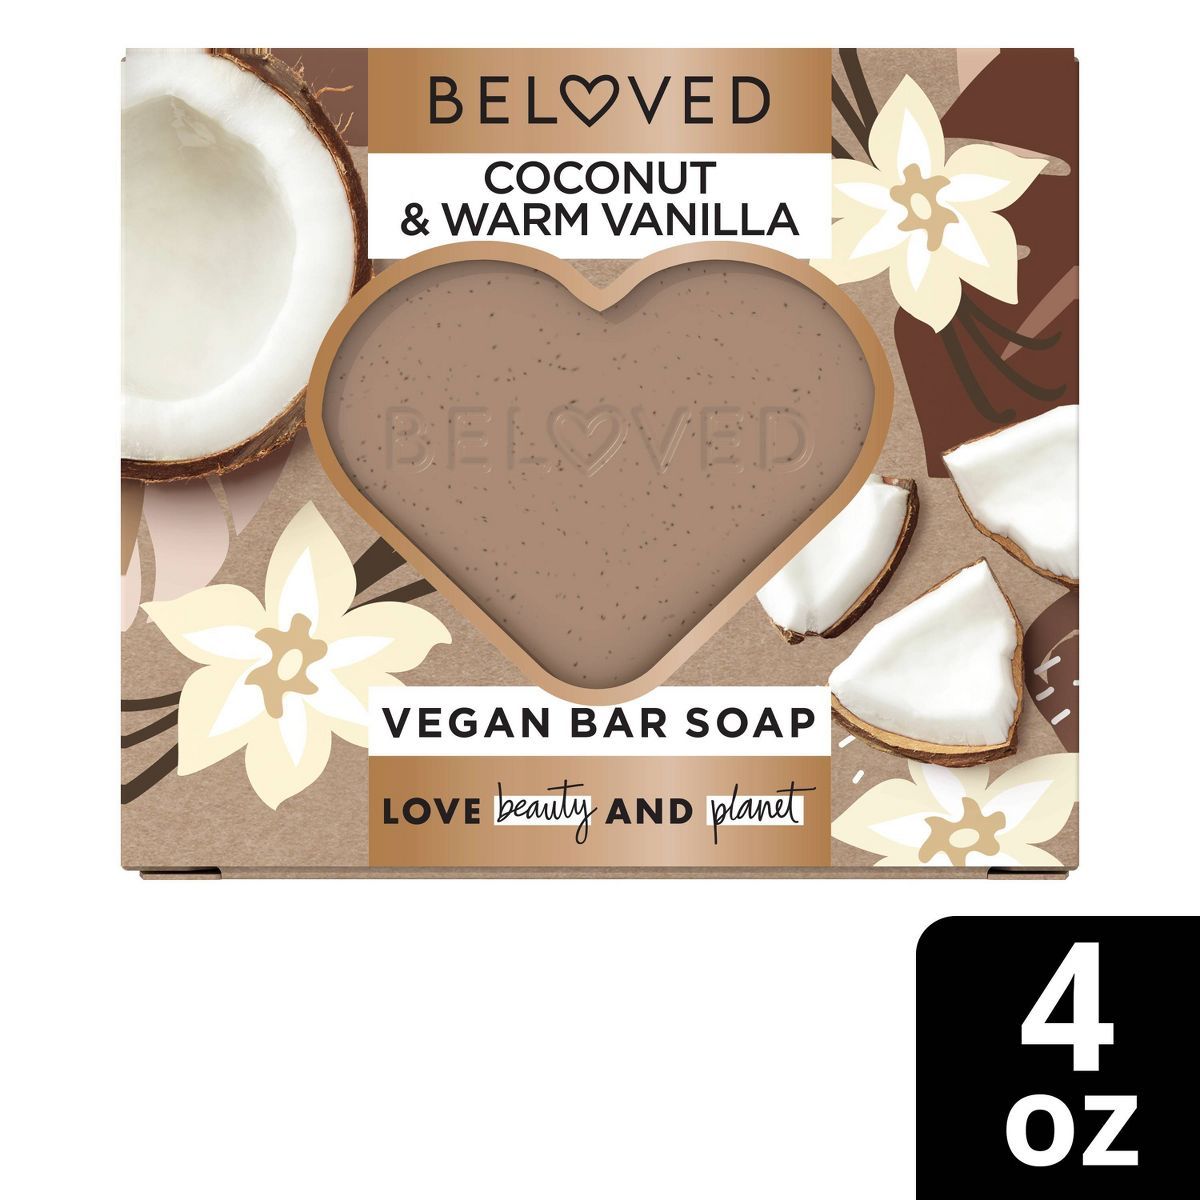 Beloved Coconut & Warm Vanilla Vegan Bar Soap - 4oz | Target